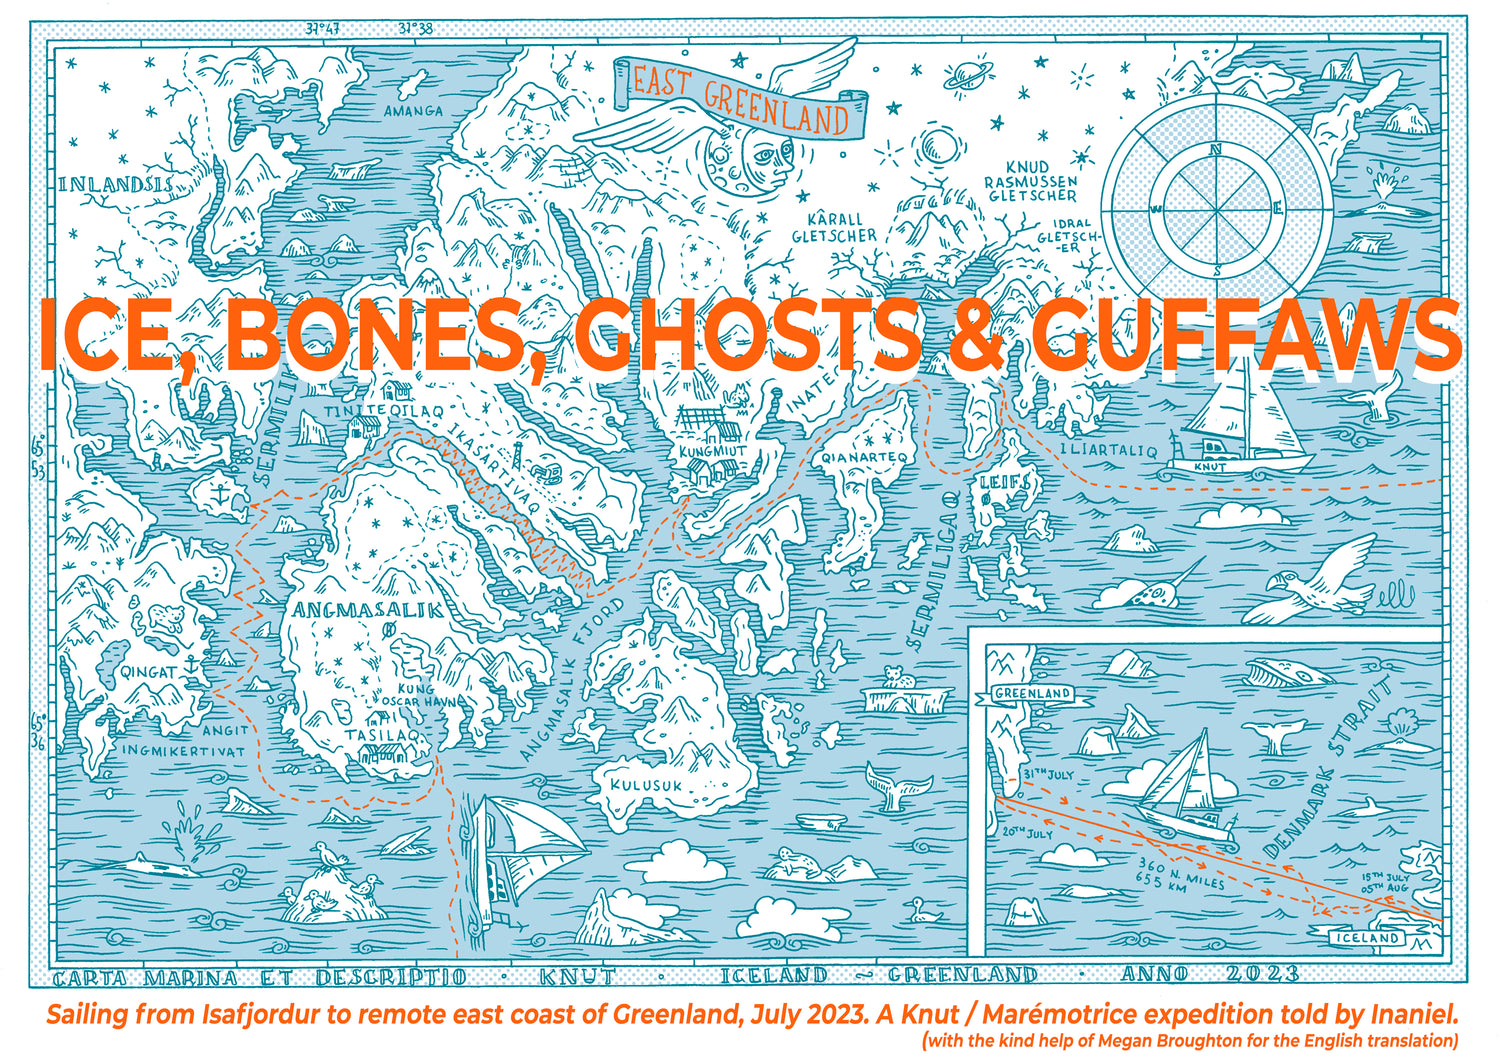 Ice, bones, ghosts & guffaws.